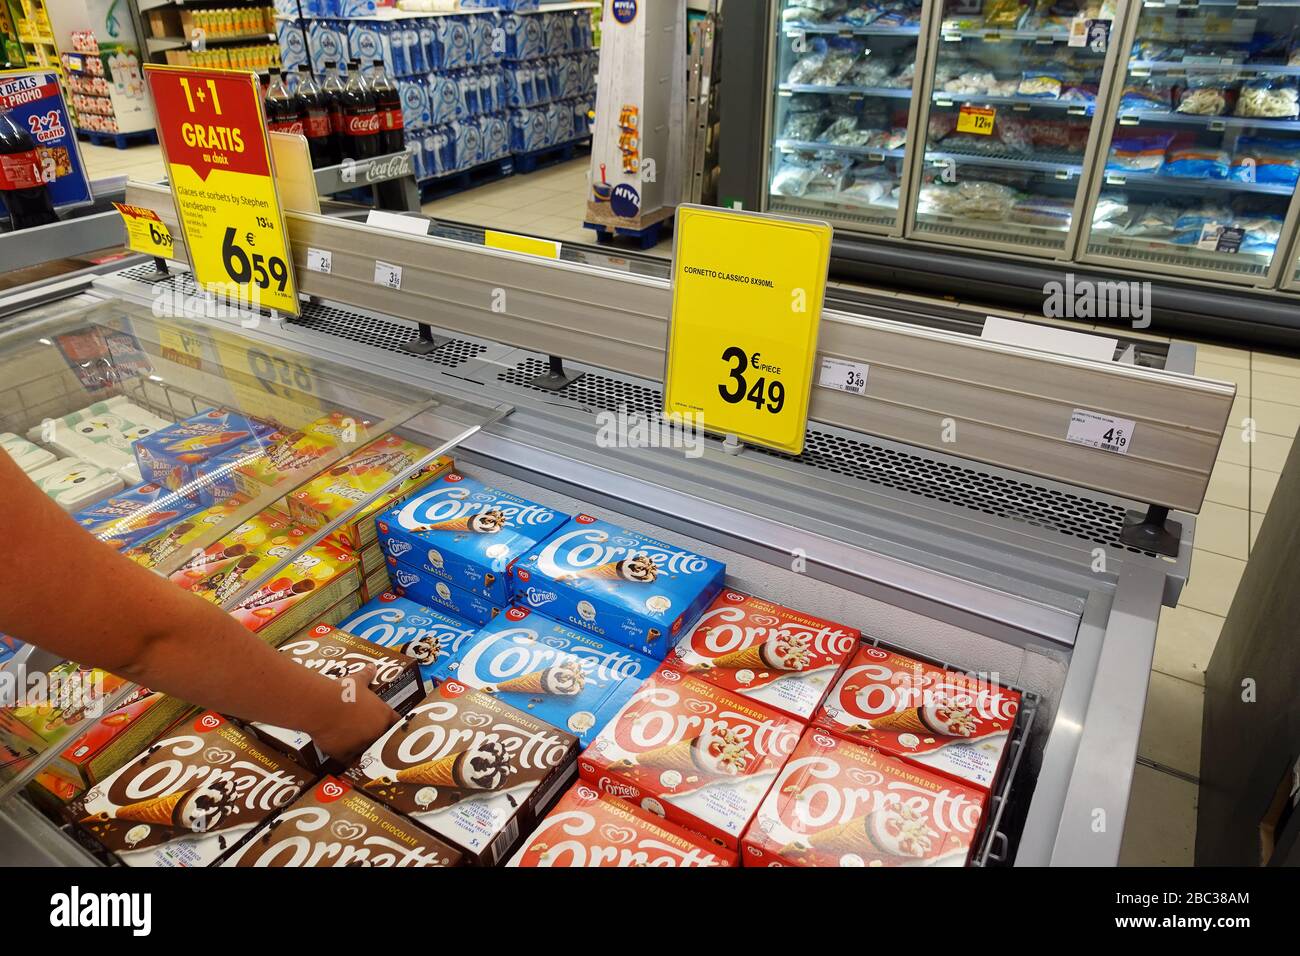 Ice creams in a supermarket Stock Photo